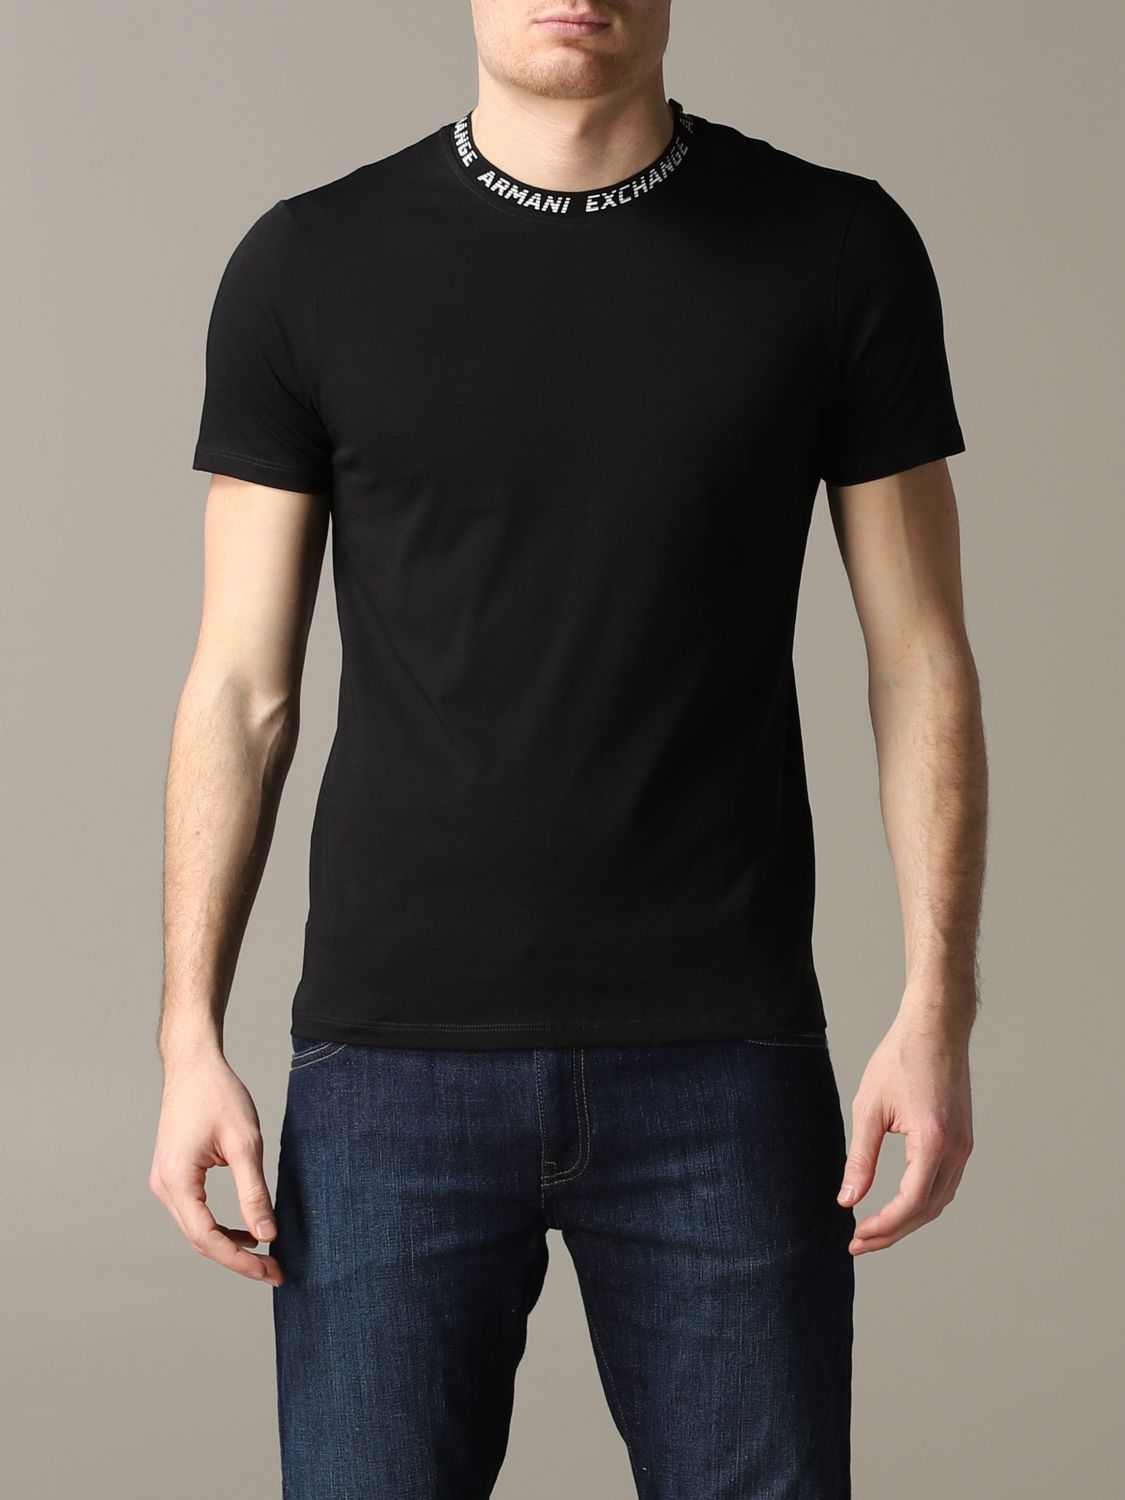 Armani Exchange crew neck t-shirt with 